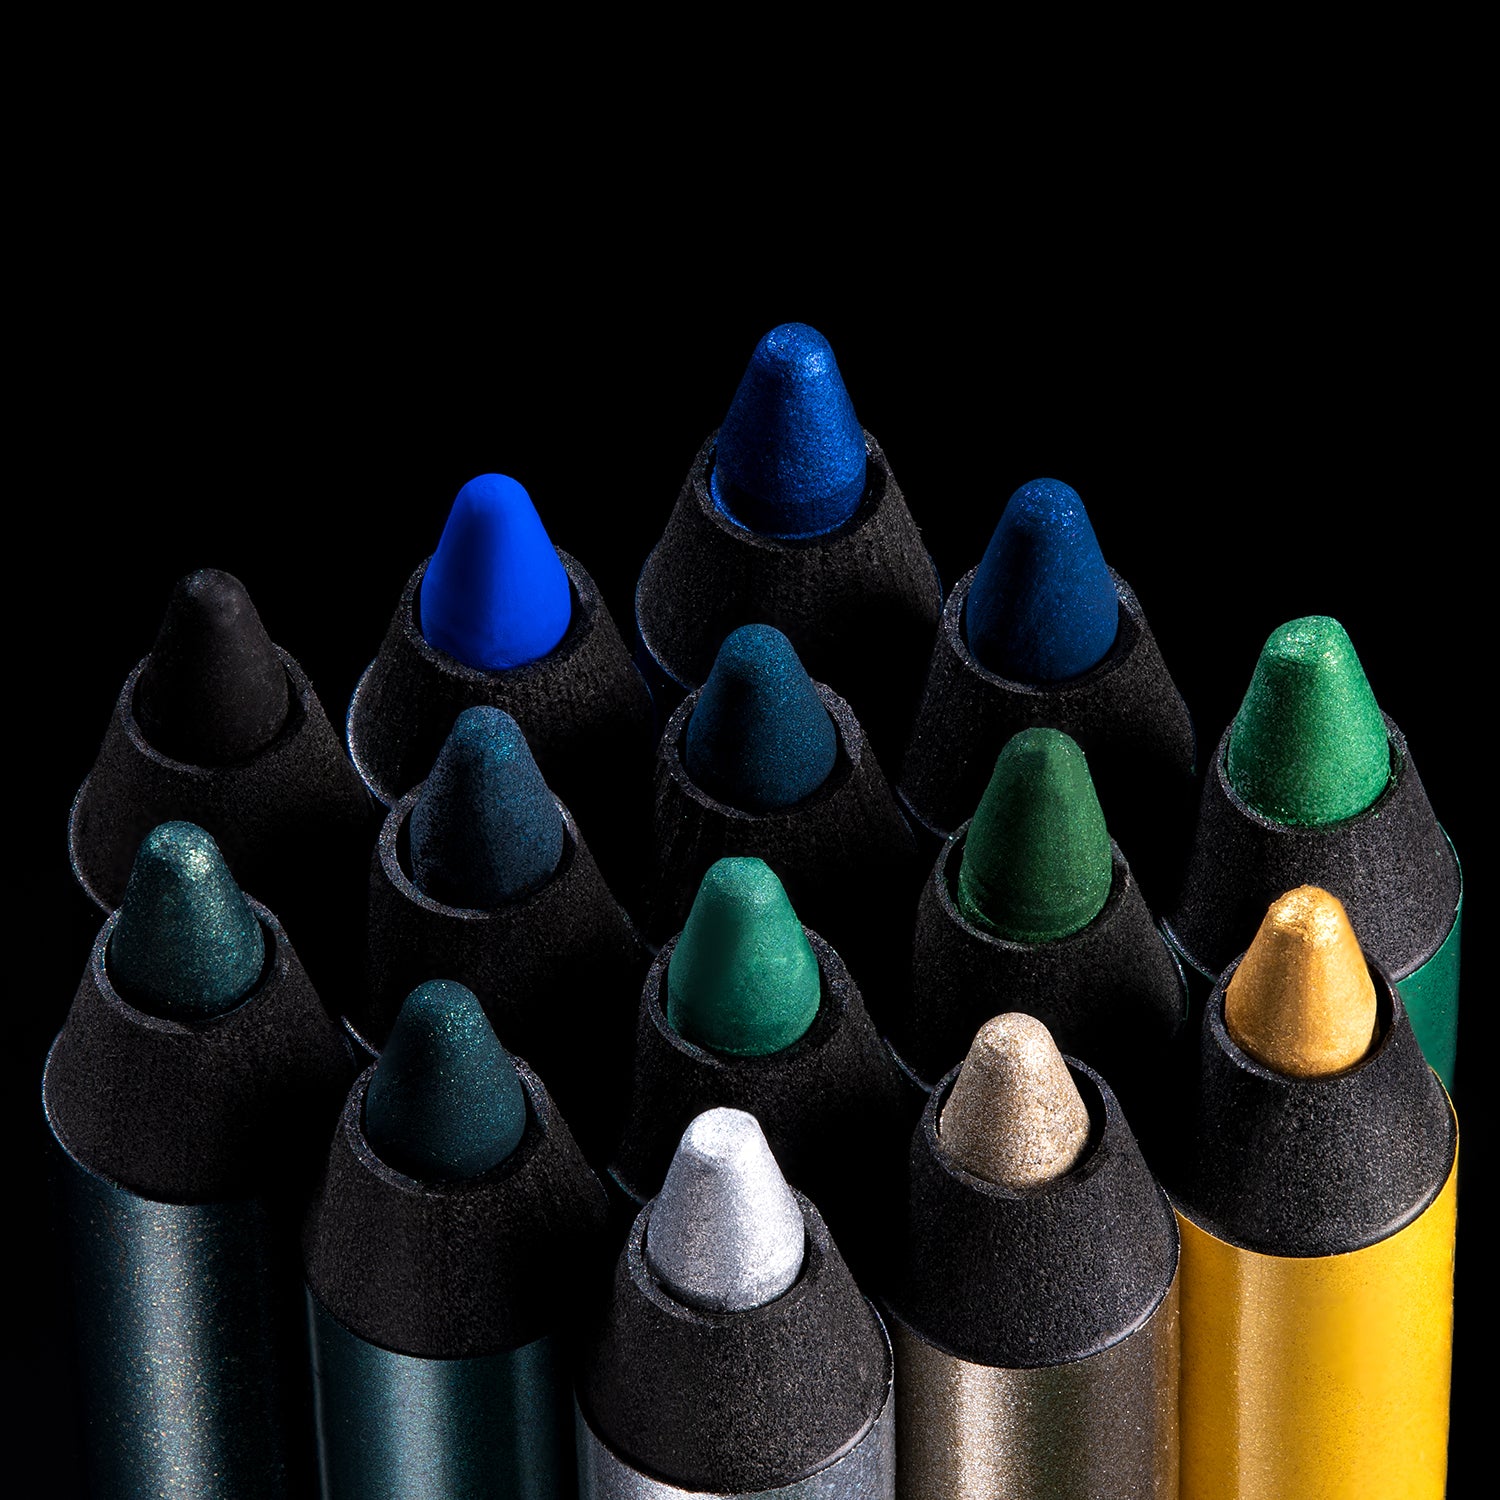 PAC Cosmetics Stay4Ever Gel Eye Pencil (1.6 gm) #Color_Blue Lagoon